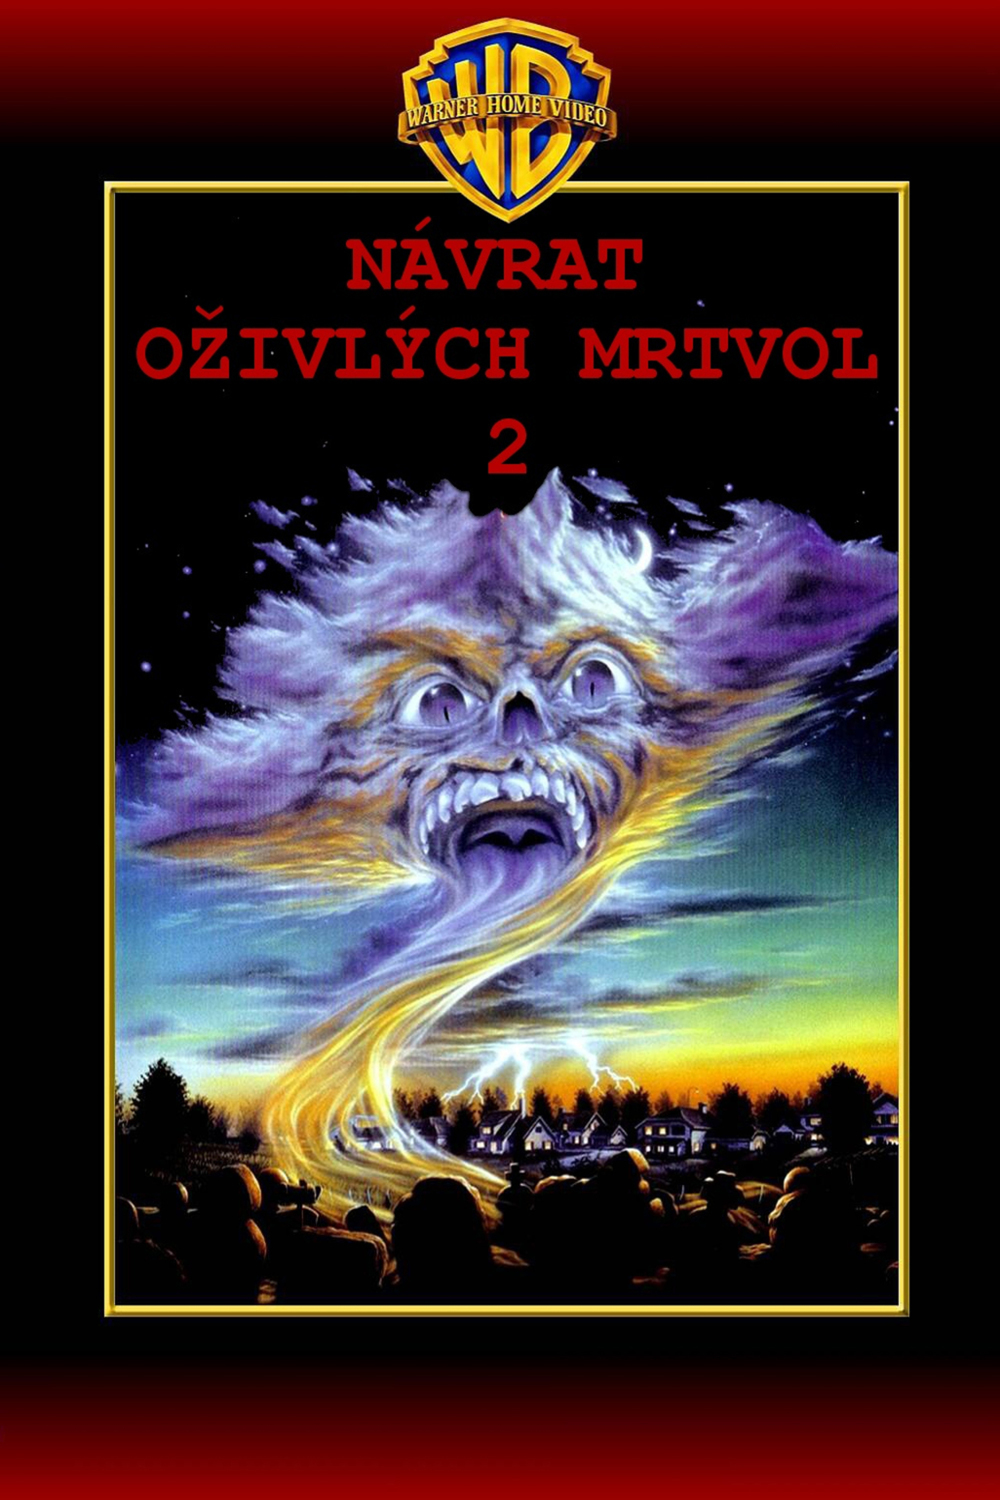 Stiahni si Filmy CZ/SK dabing Navrat ozivlych mrtvol 2 / Return of the Living Dead Part II(1988)(CZ) = CSFD 63%